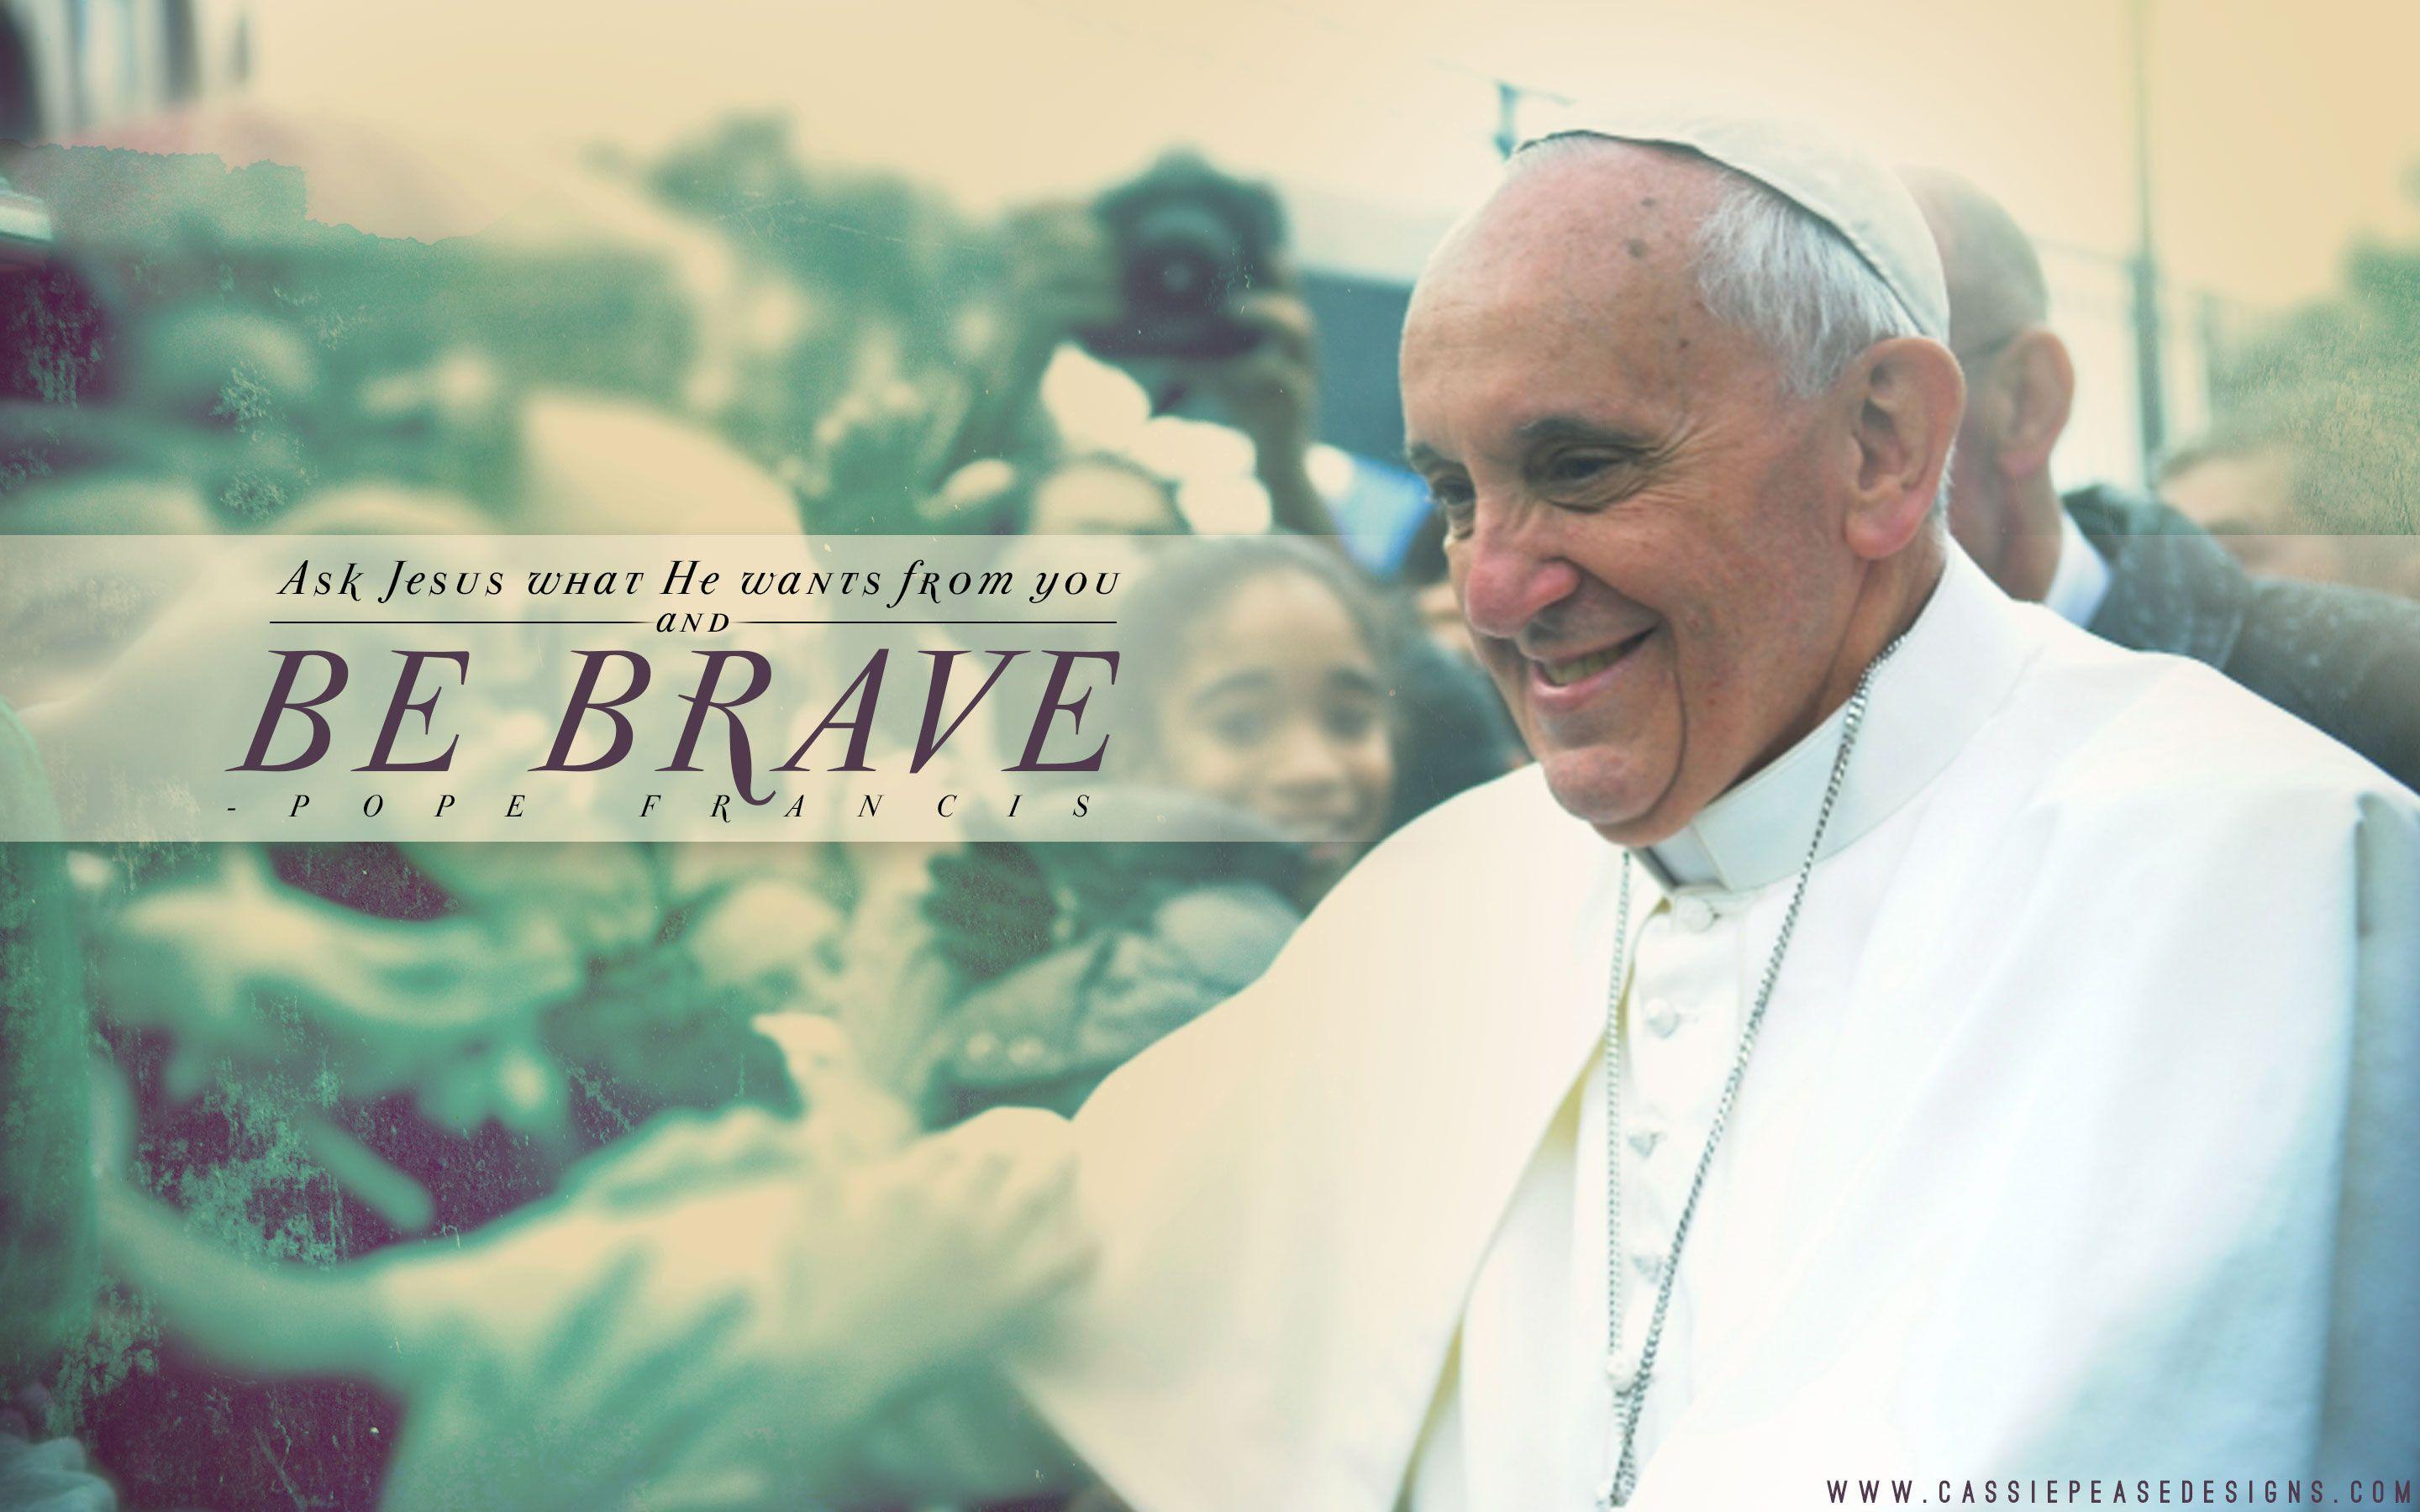 Pope Francis “Be Brave” Desktop Wallpaper. Cassie Pease Designs